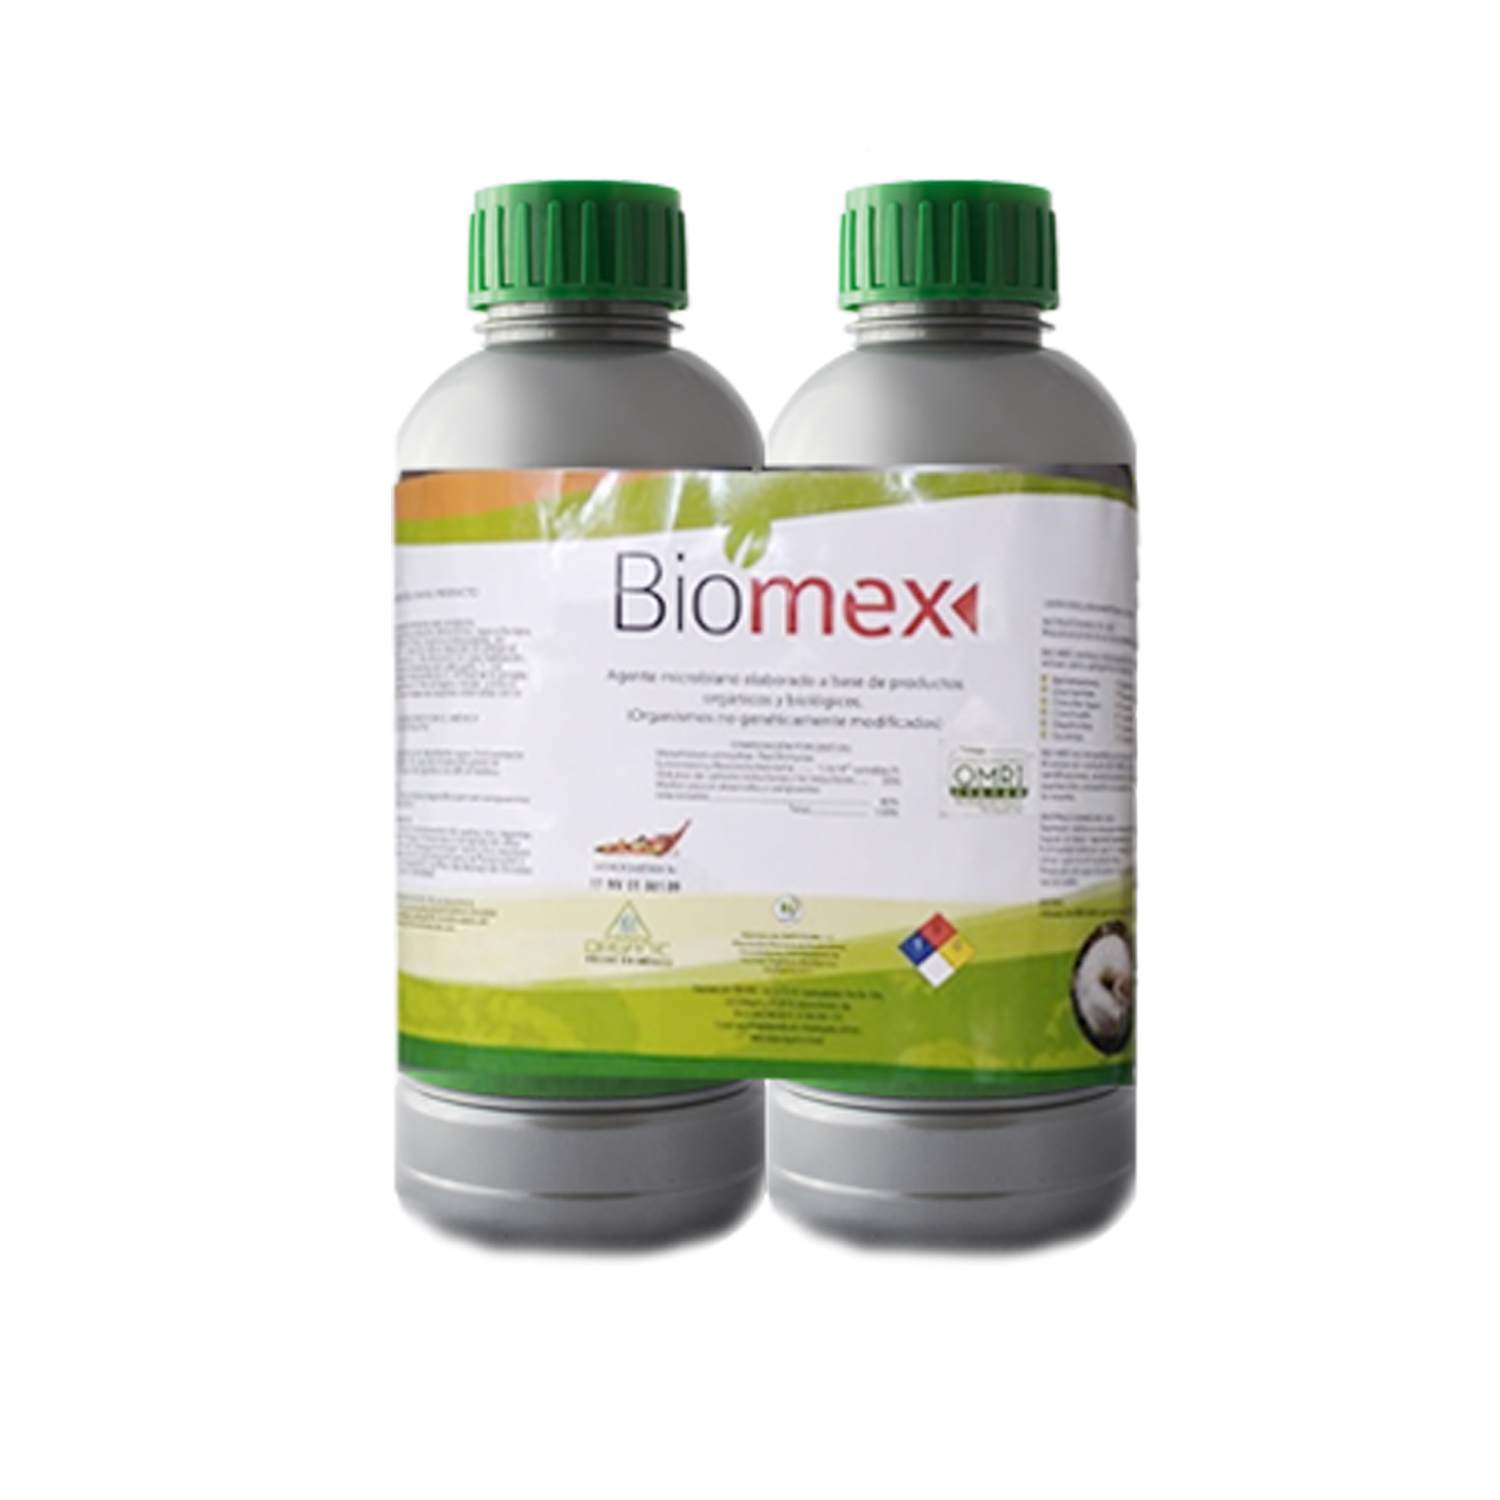 Biomex - fertilizantesorganicos